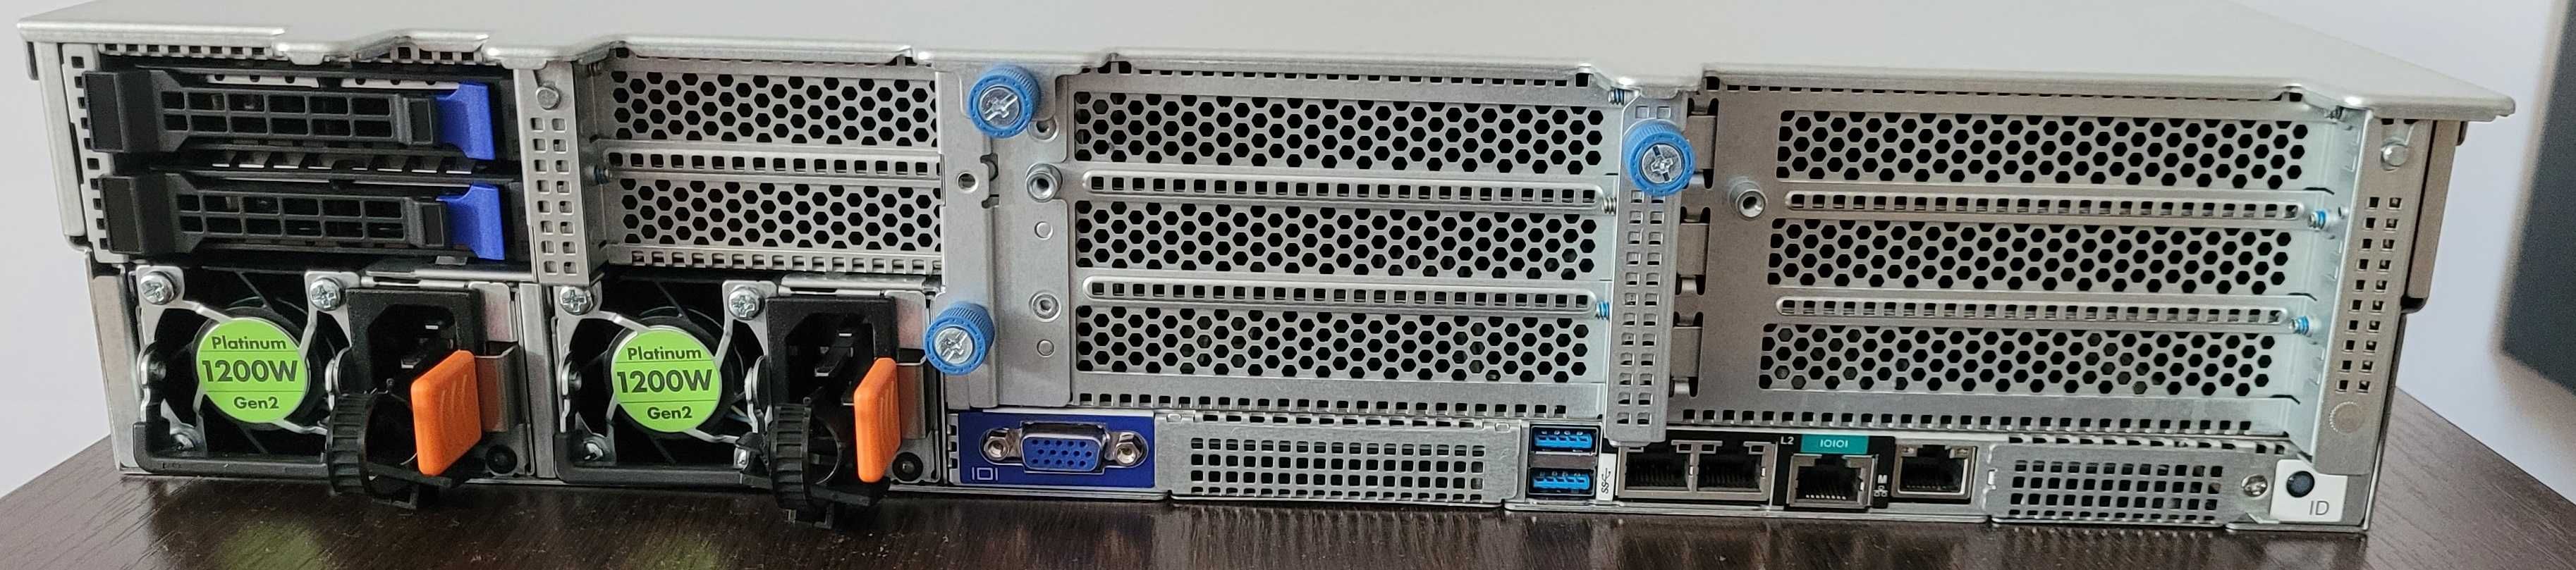 HPE Cloudline CL2200 Gen10 server storage nou urgent.